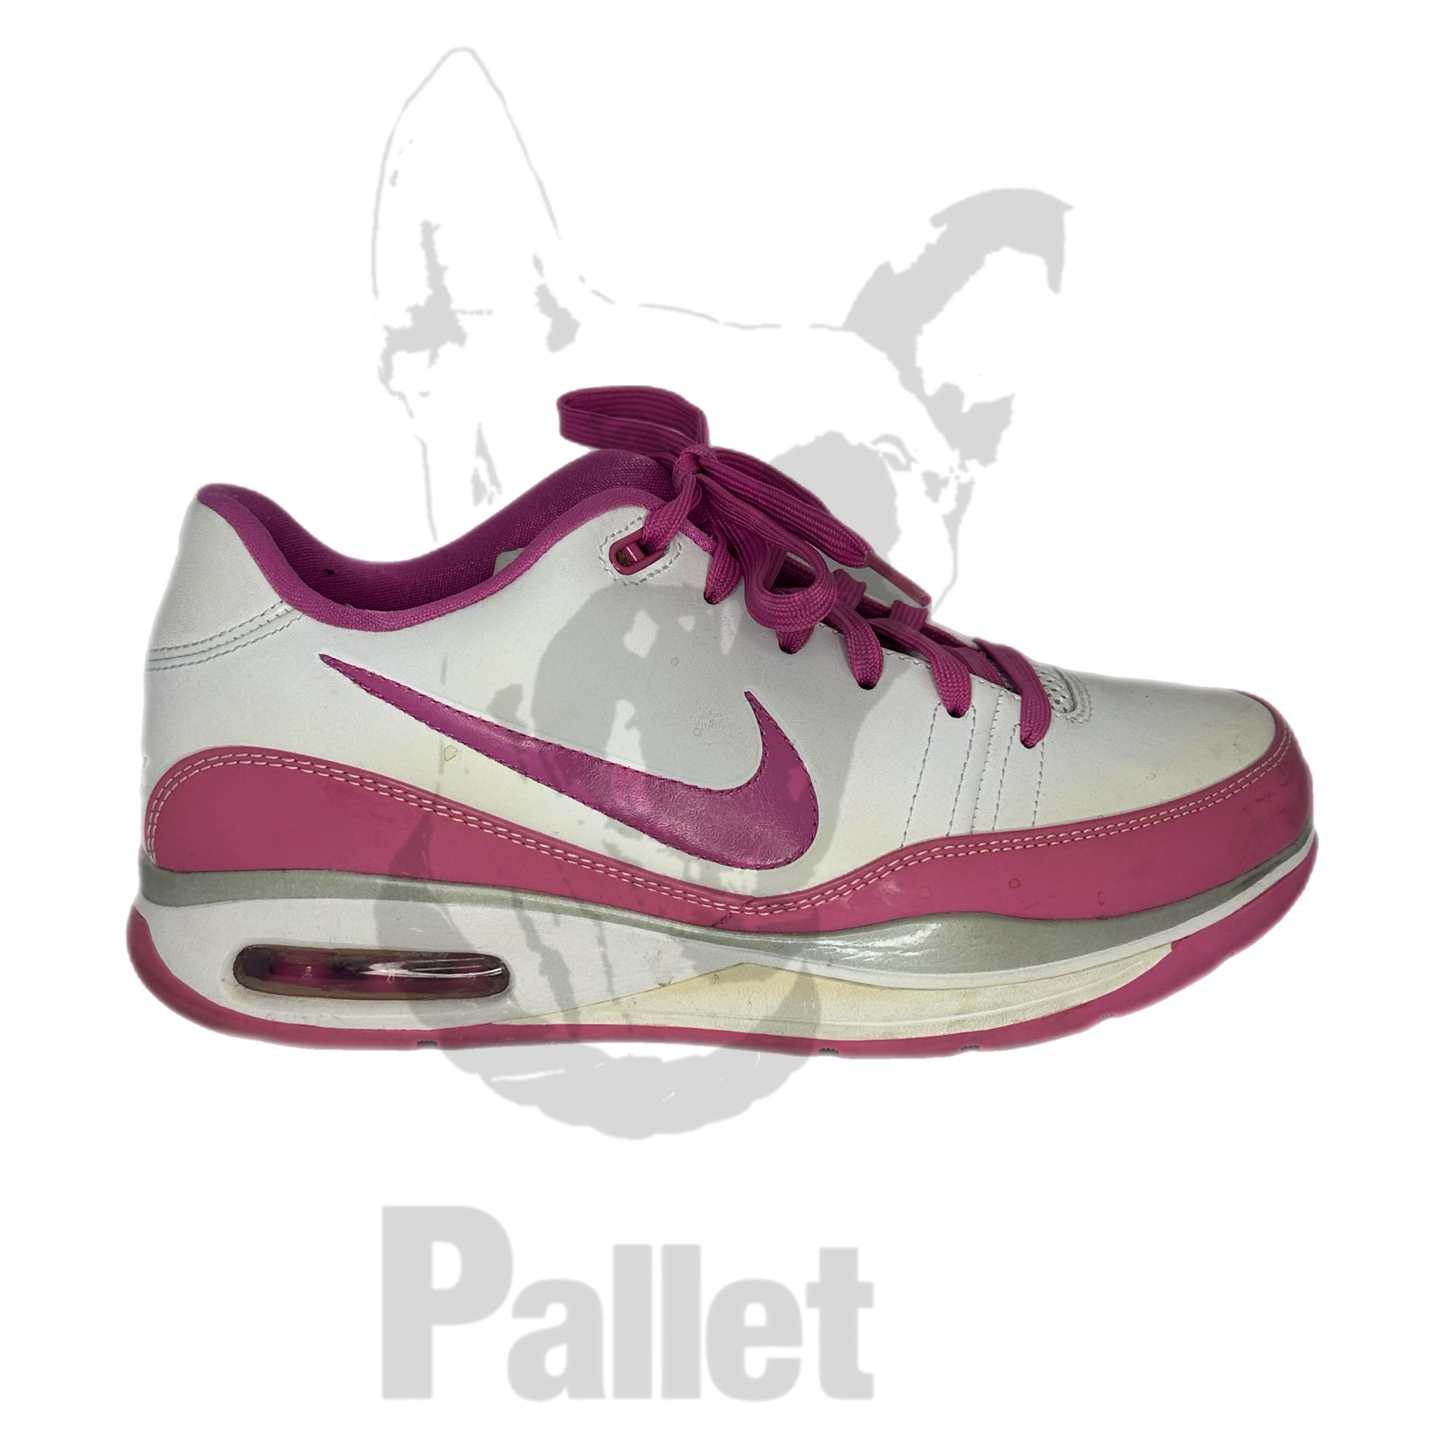 Nike -" Breast Cancer Awareness 362514-161